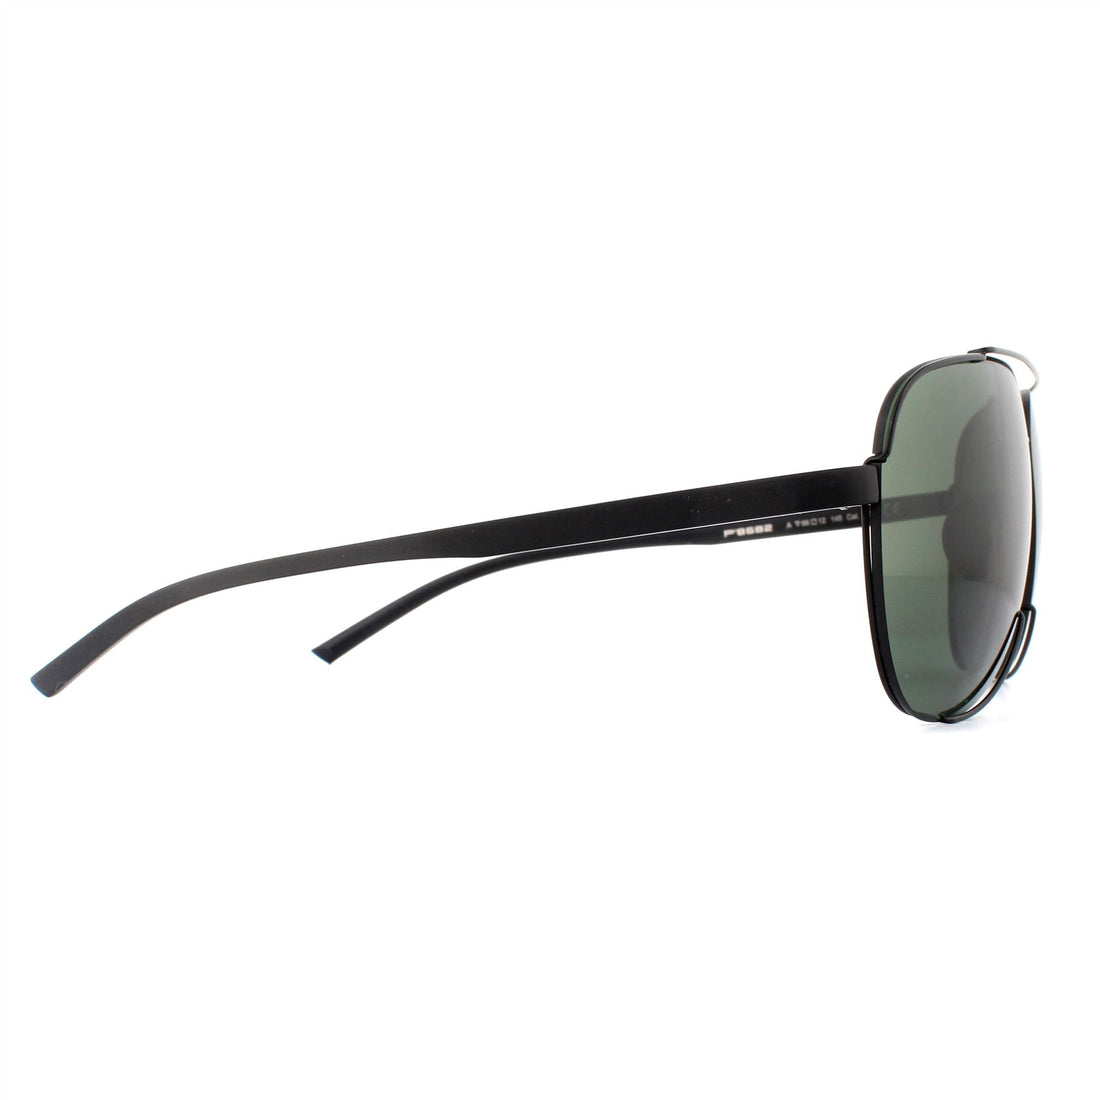 Porsche Design P8682 Sunglasses